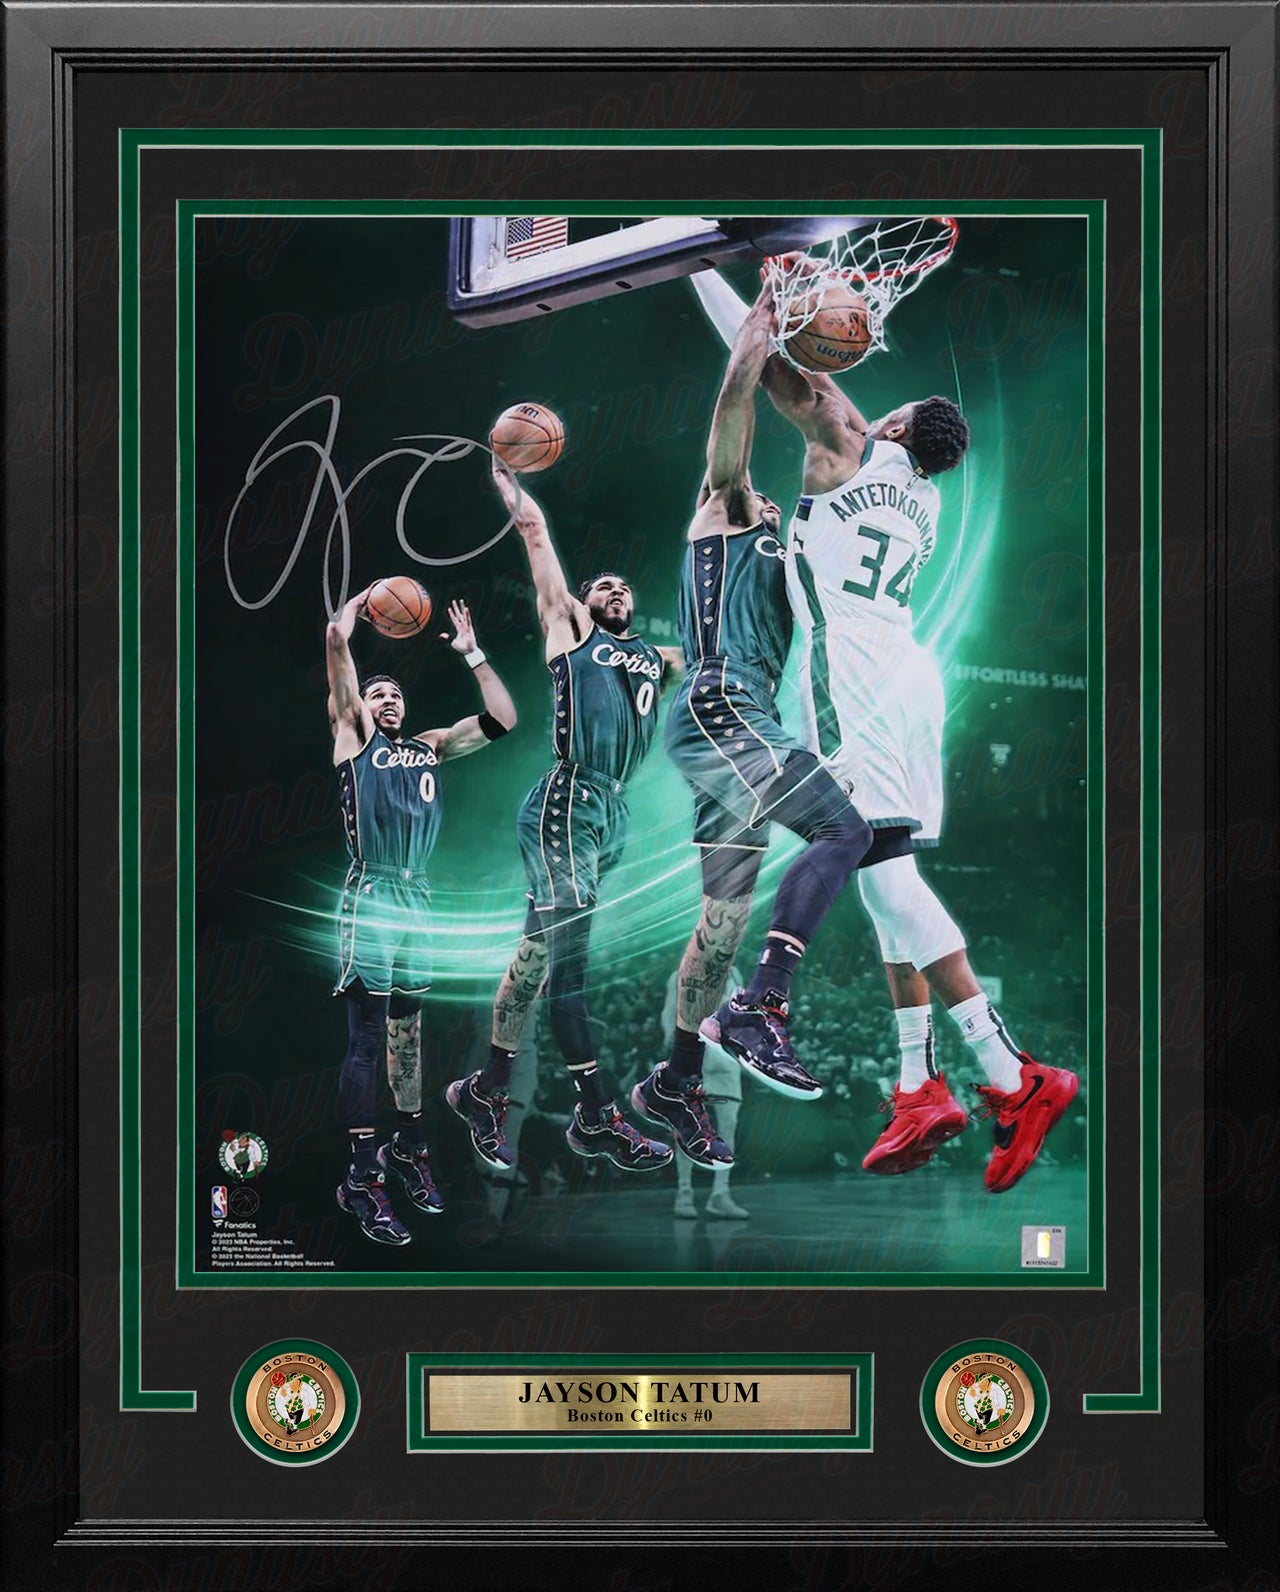 Jayson Tatum Slam Dunk v. Bucks Boston Celtics Autographed 16x20 Framed Basketball Progression Photo